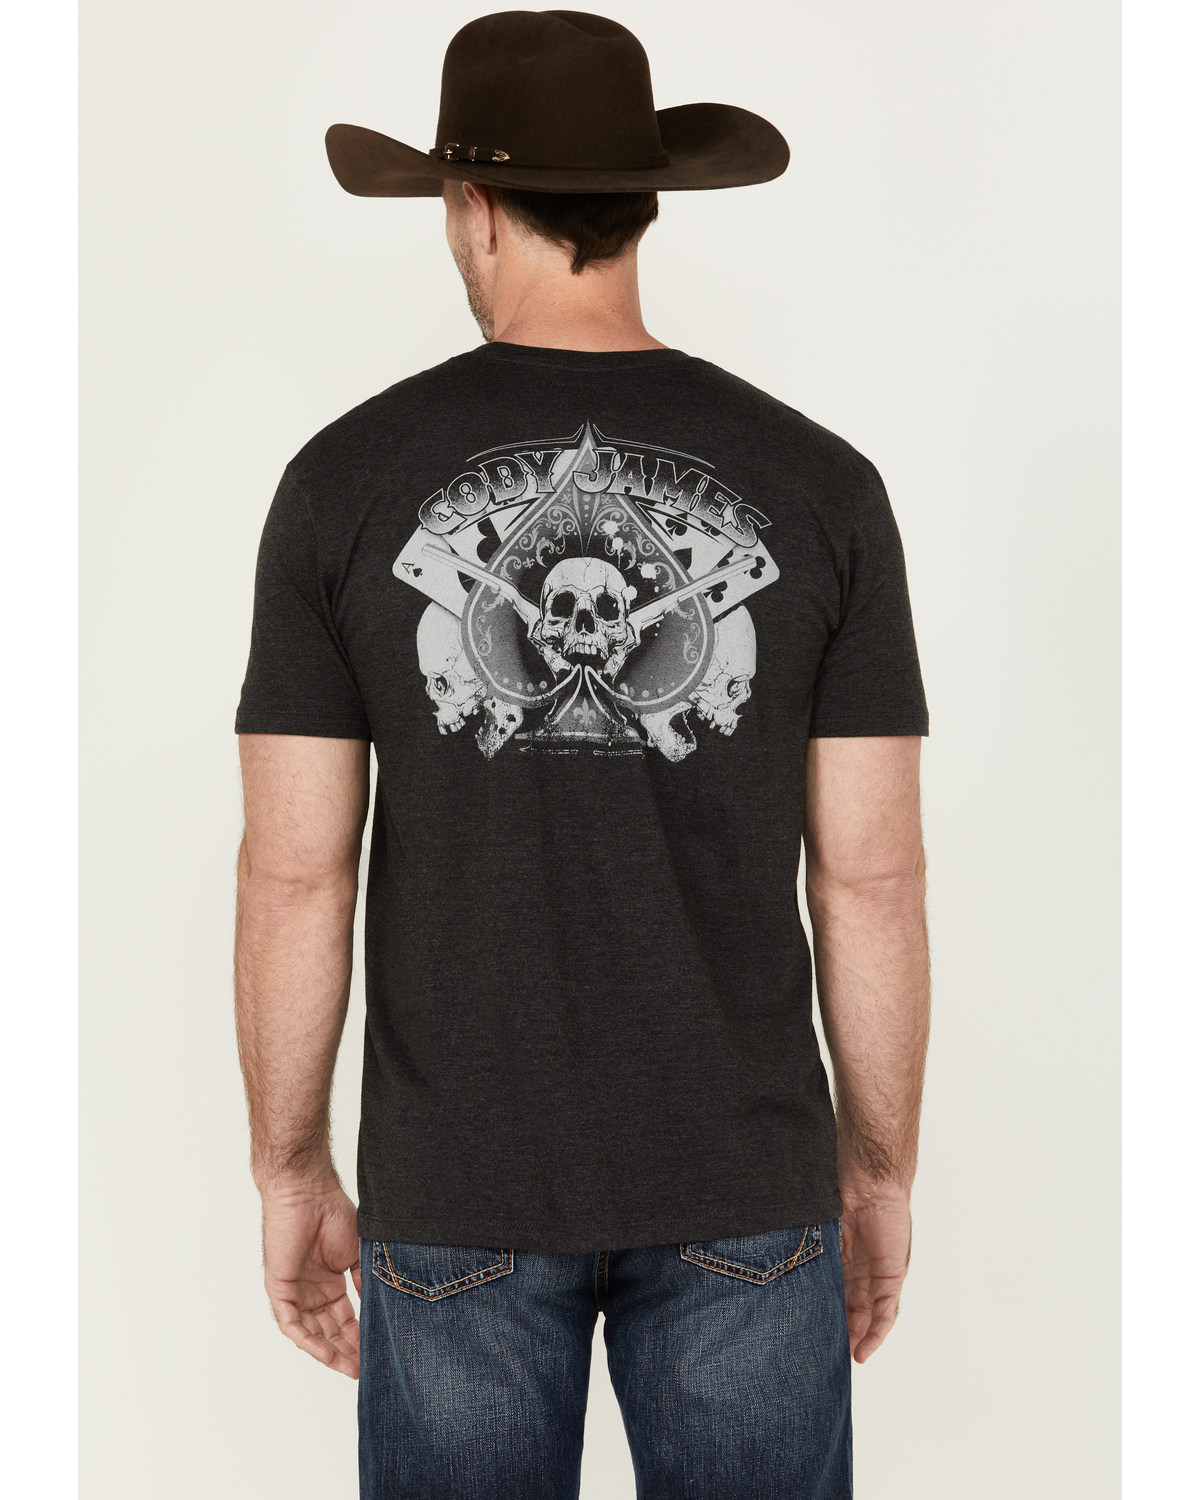 Cody James Men's Ace Skull Short Sleeve Graphic T-Shirt